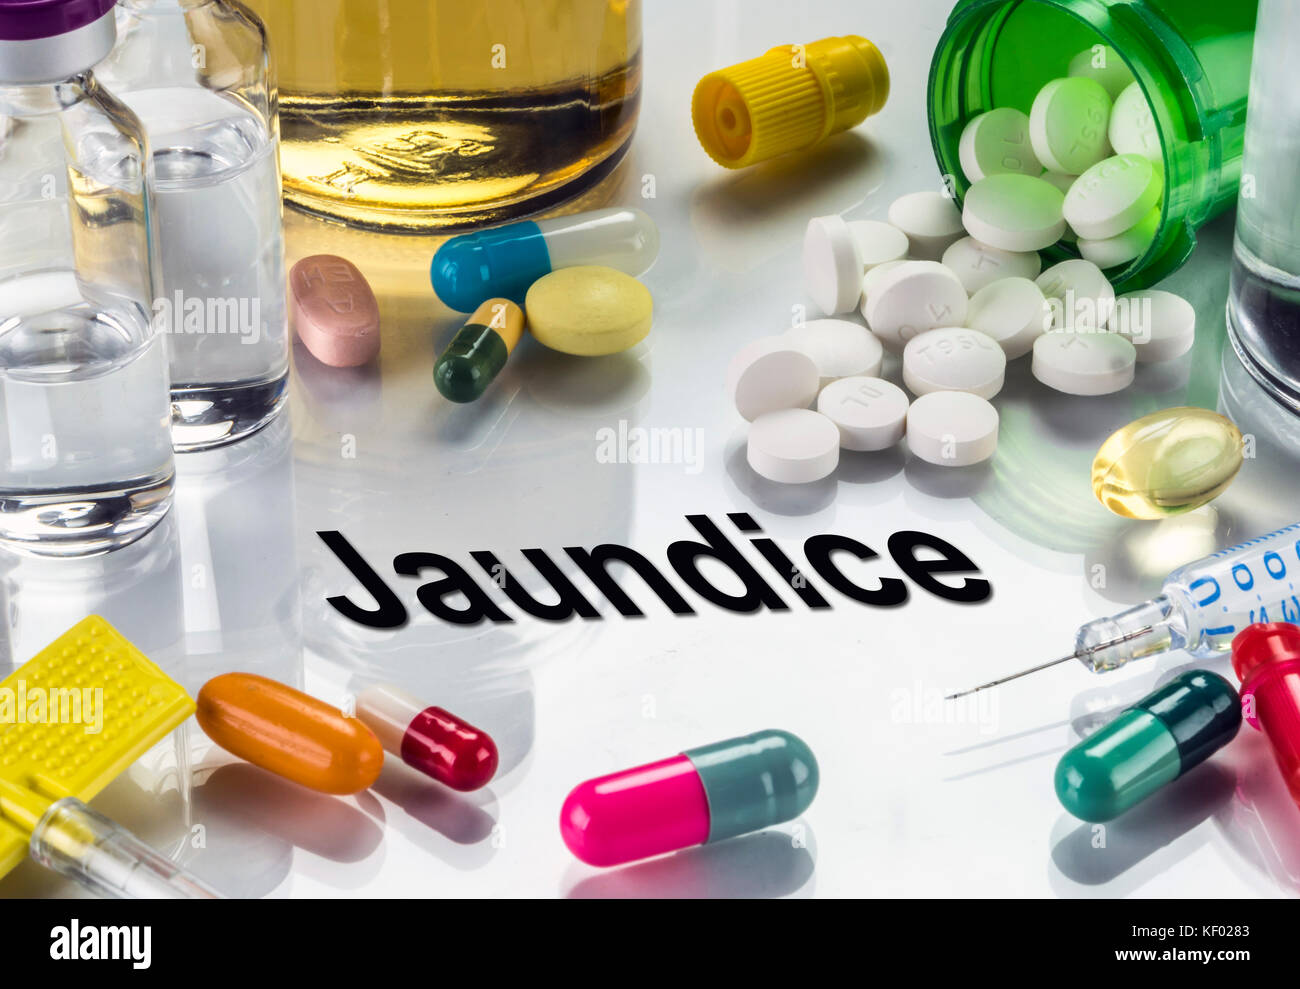 Jaundice, medicines as concept of ordinary treatment, conceptual image Stock Photo